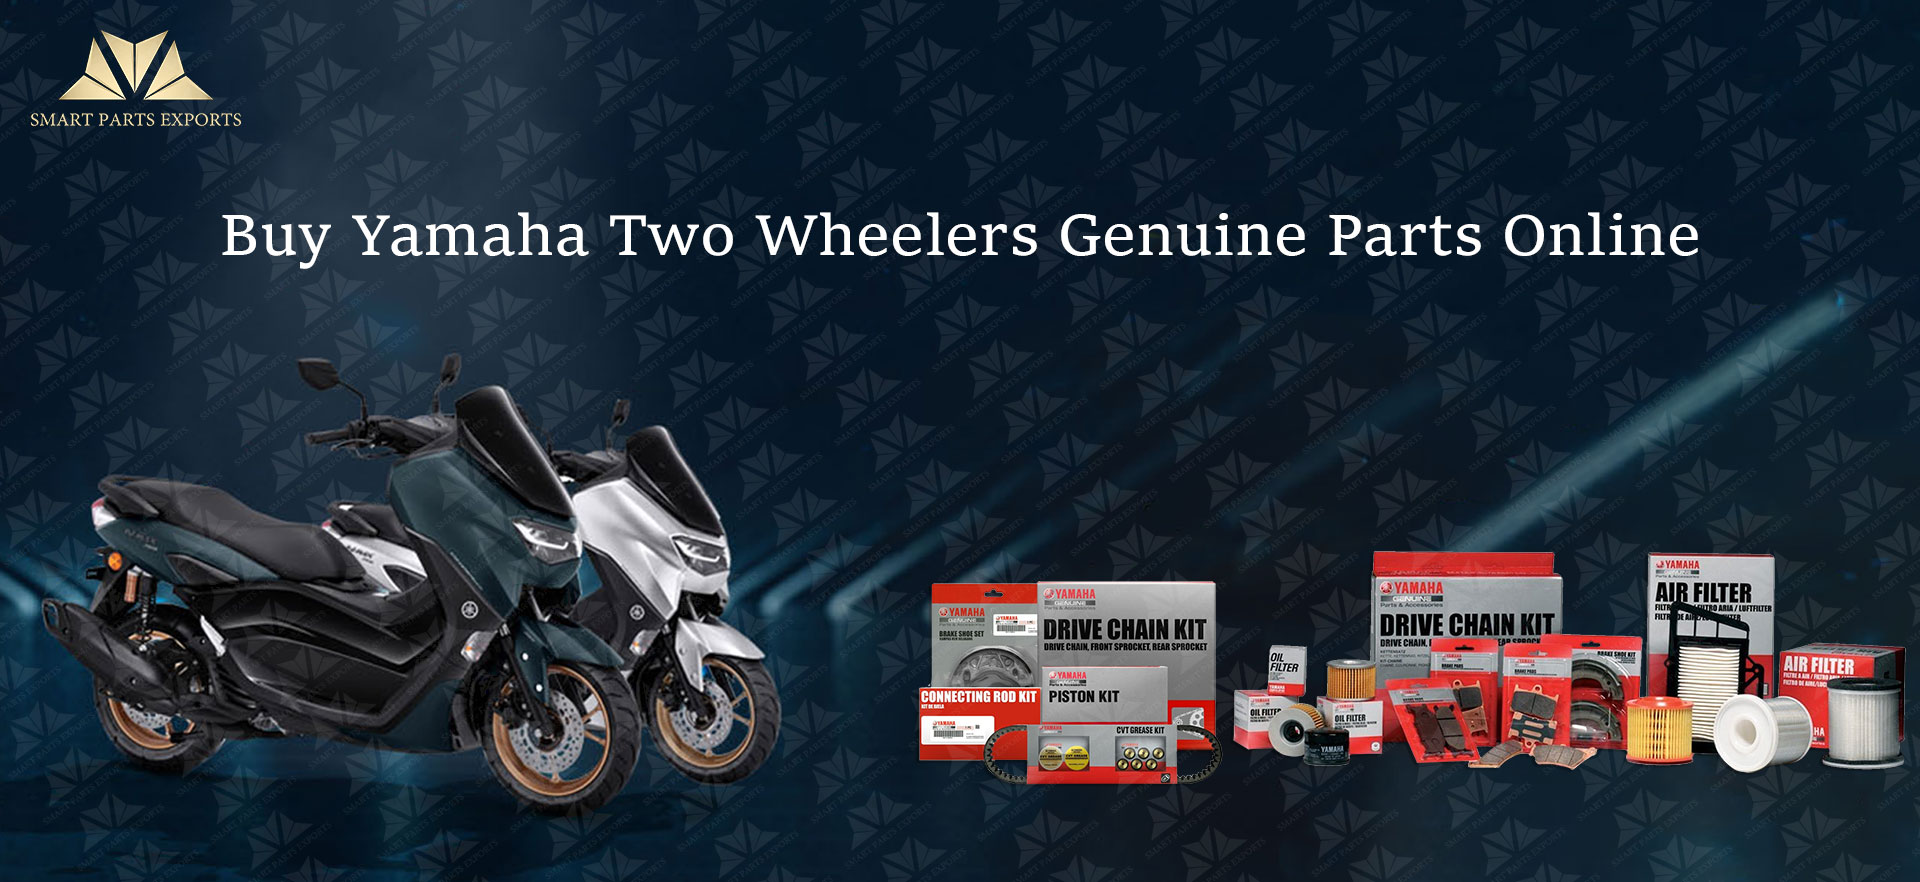 Buy Yamaha Two Wheelers Genuine Parts Online